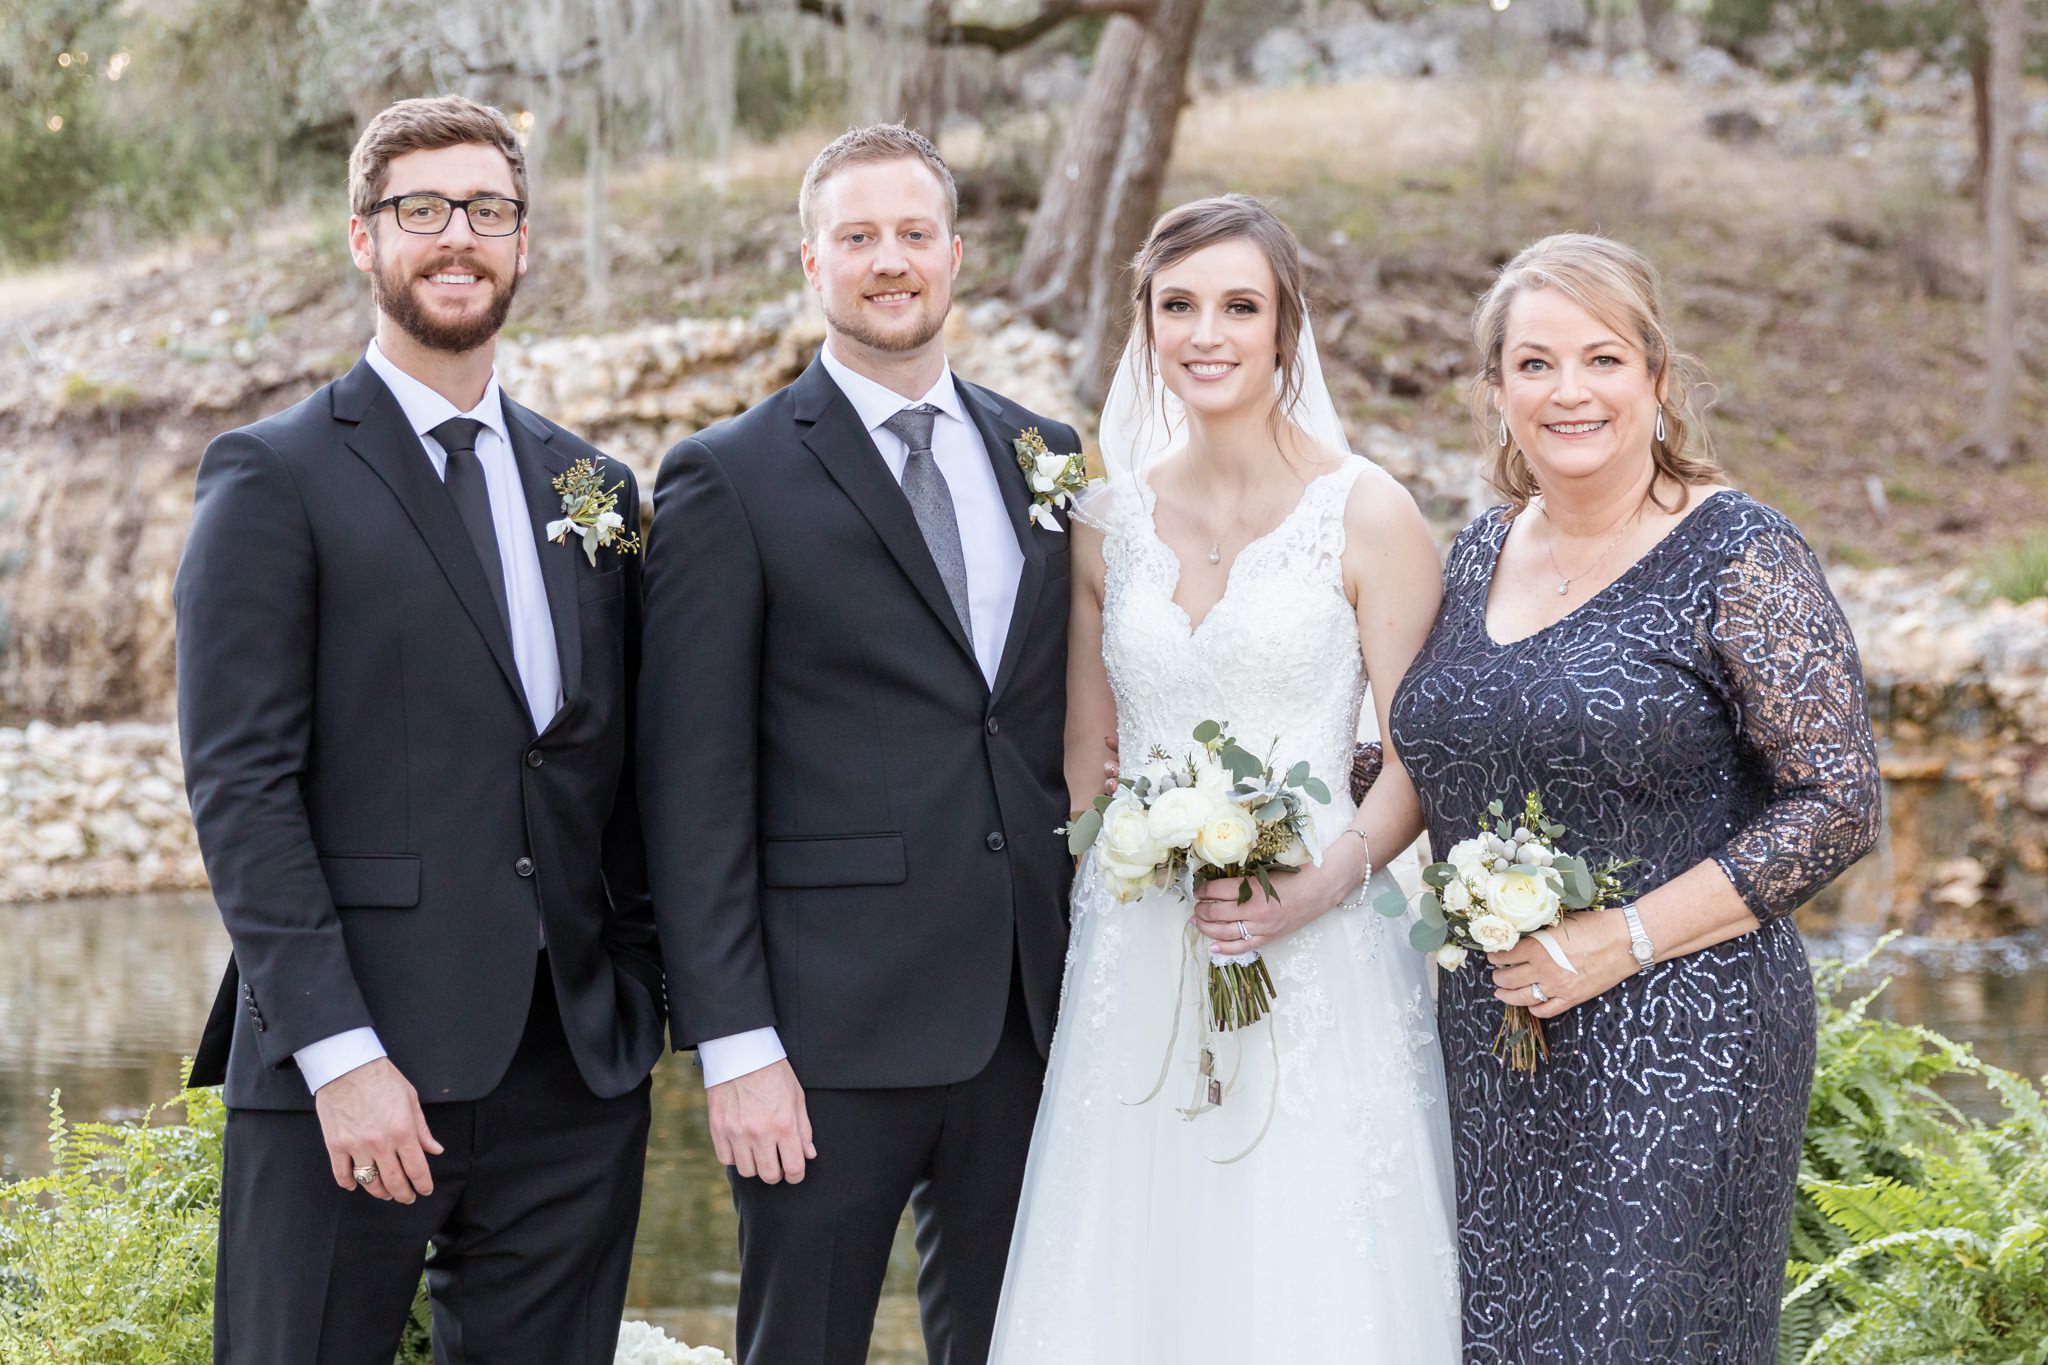 An Elegant Charcoal and Ivory Wedding at Hidden Falls in Spring Branch, TX by Dawn Elizabeth Studios, San Antonio Wedding Photographer